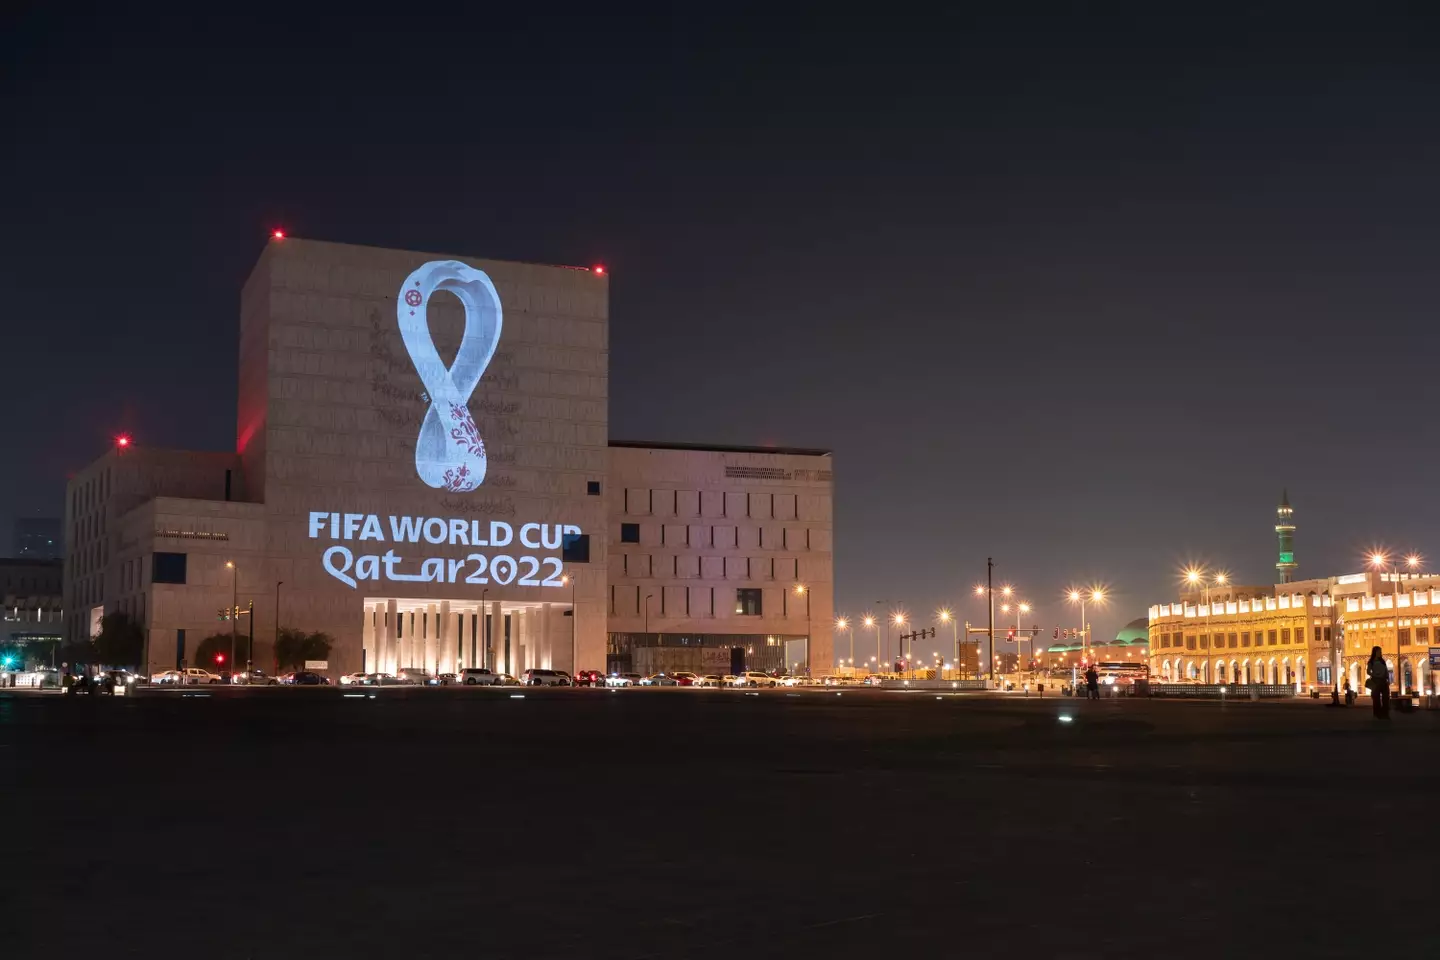 The 2022 Qatar World Cup will start on 20 November 2022.